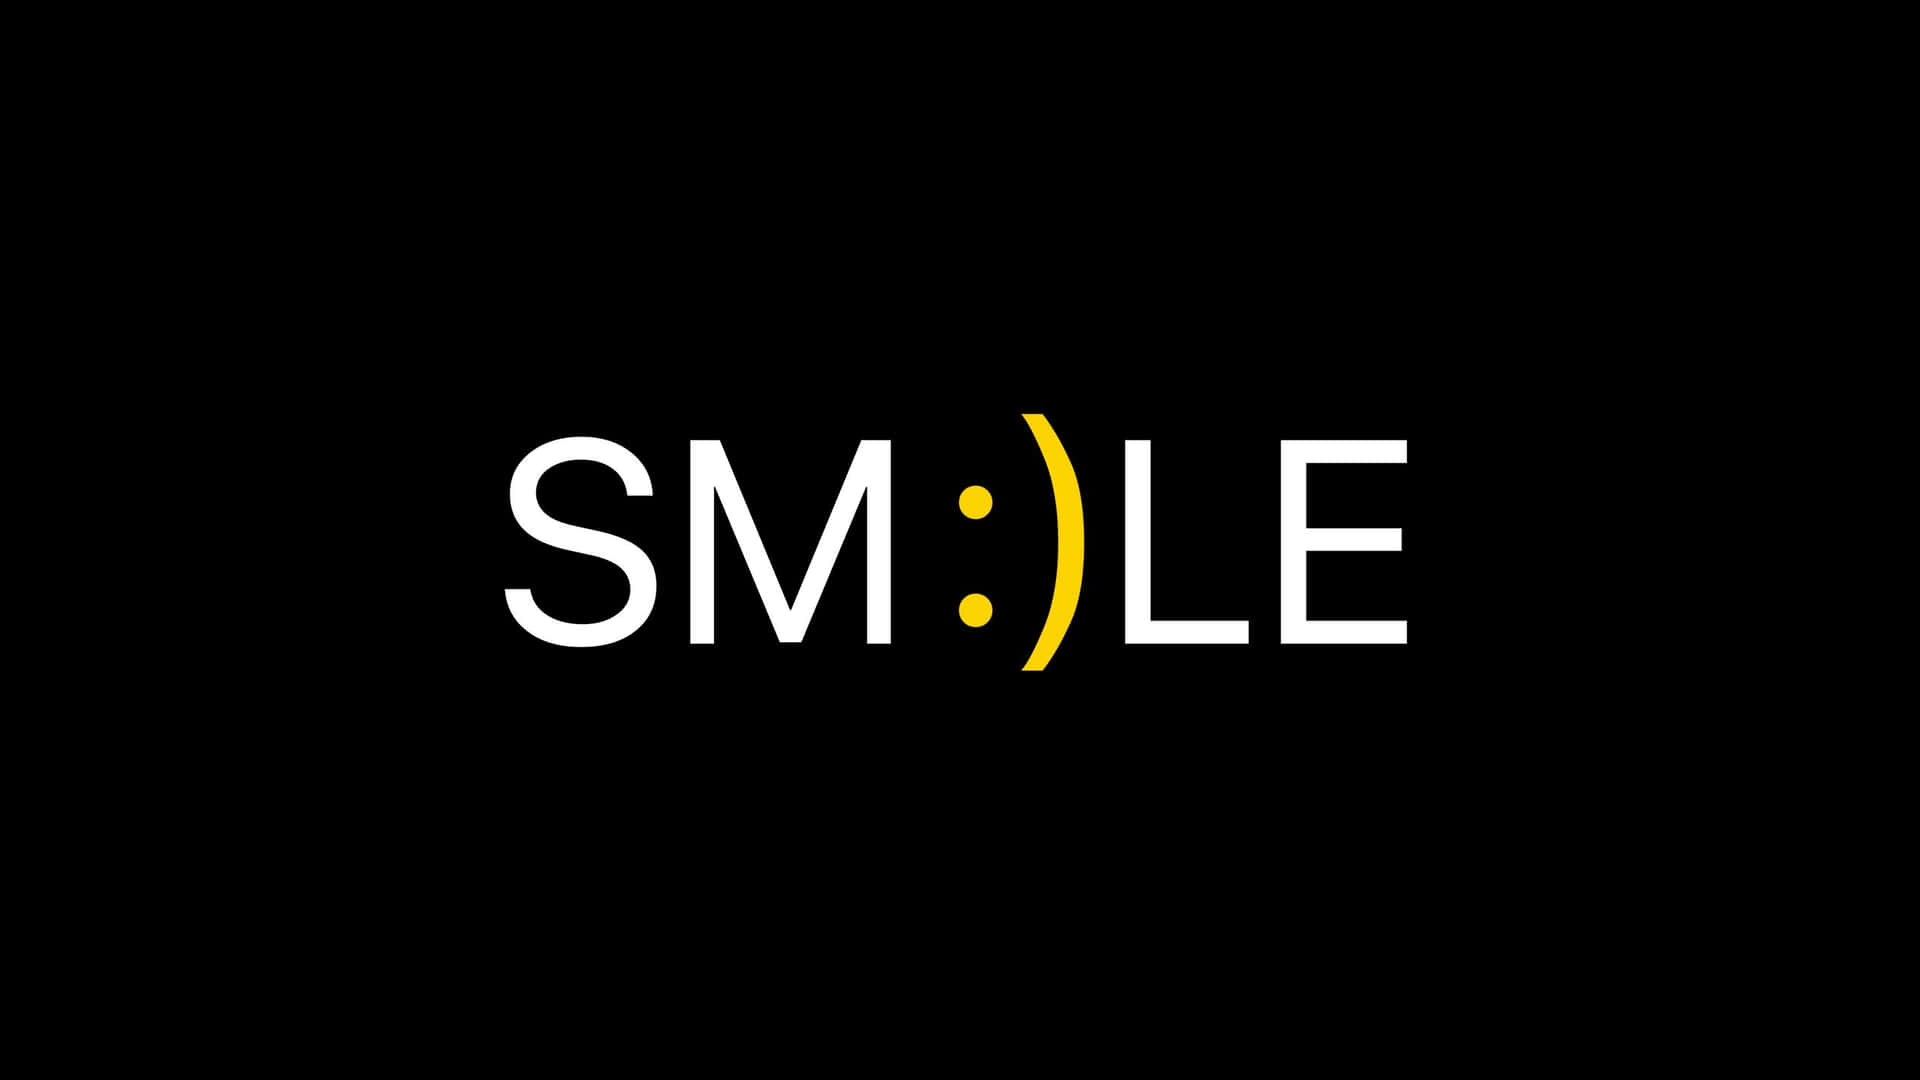 Creative Smile Text Design Wallpaper